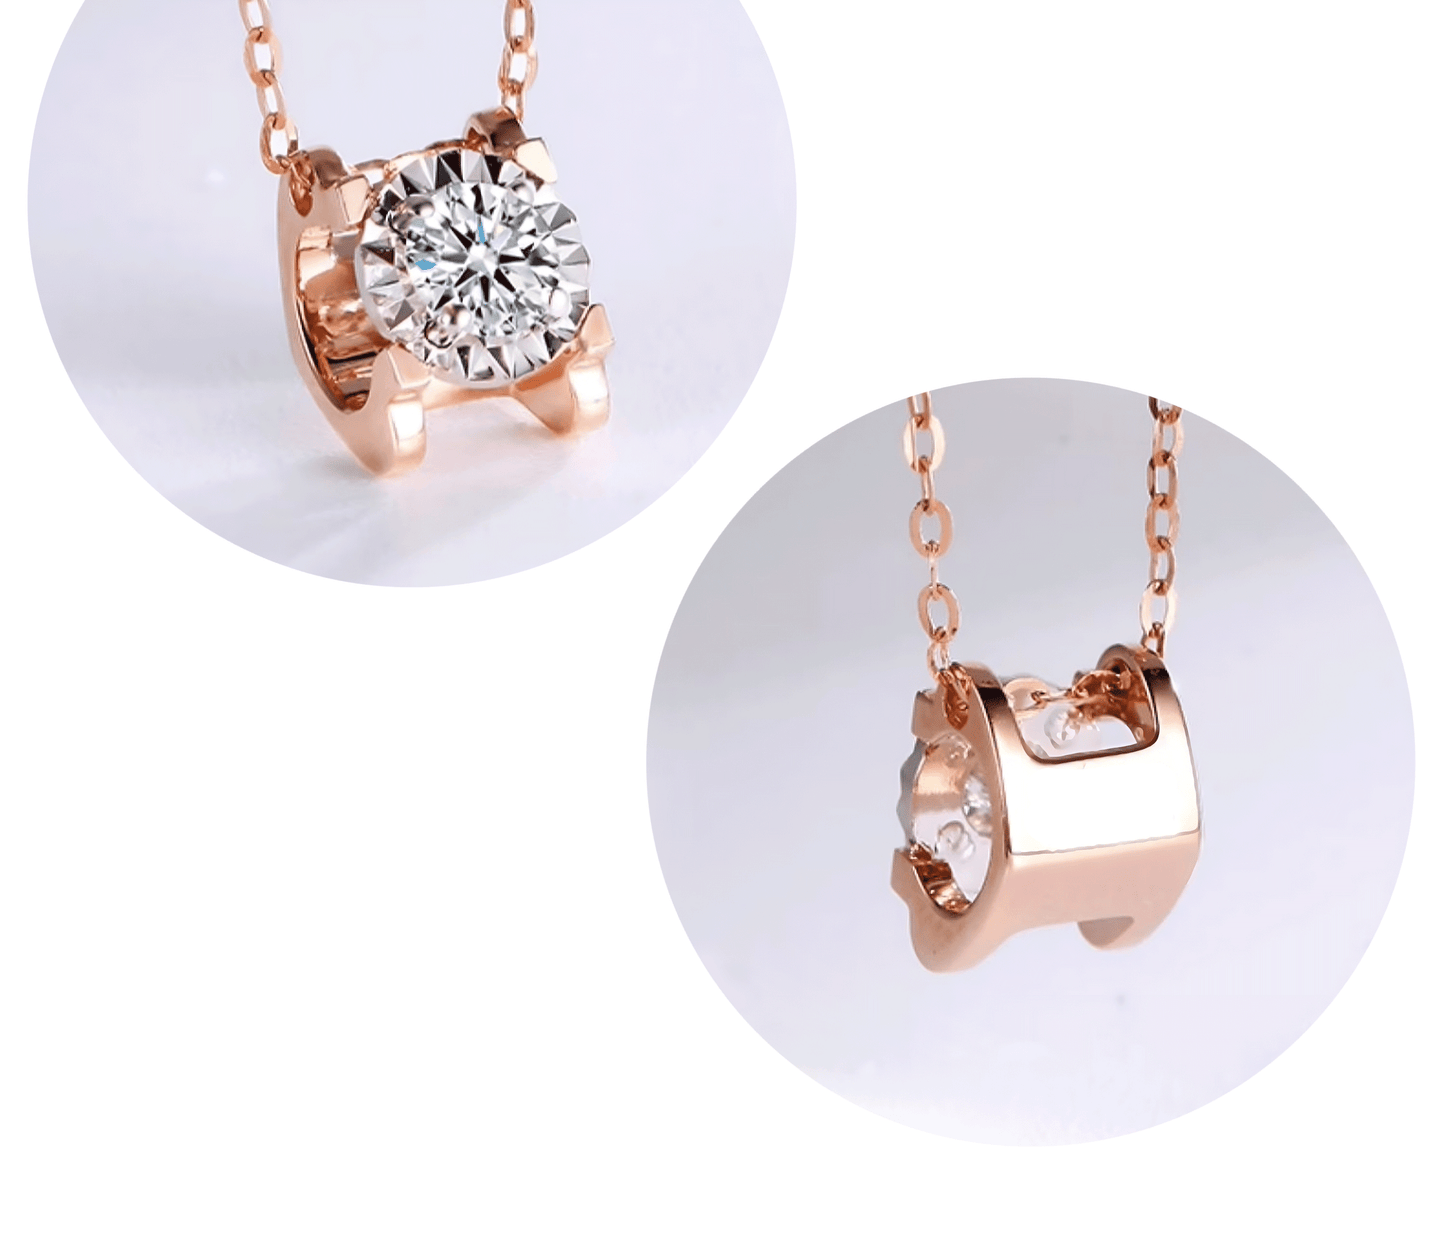 Celine Diamond Necklace in Rose Gold